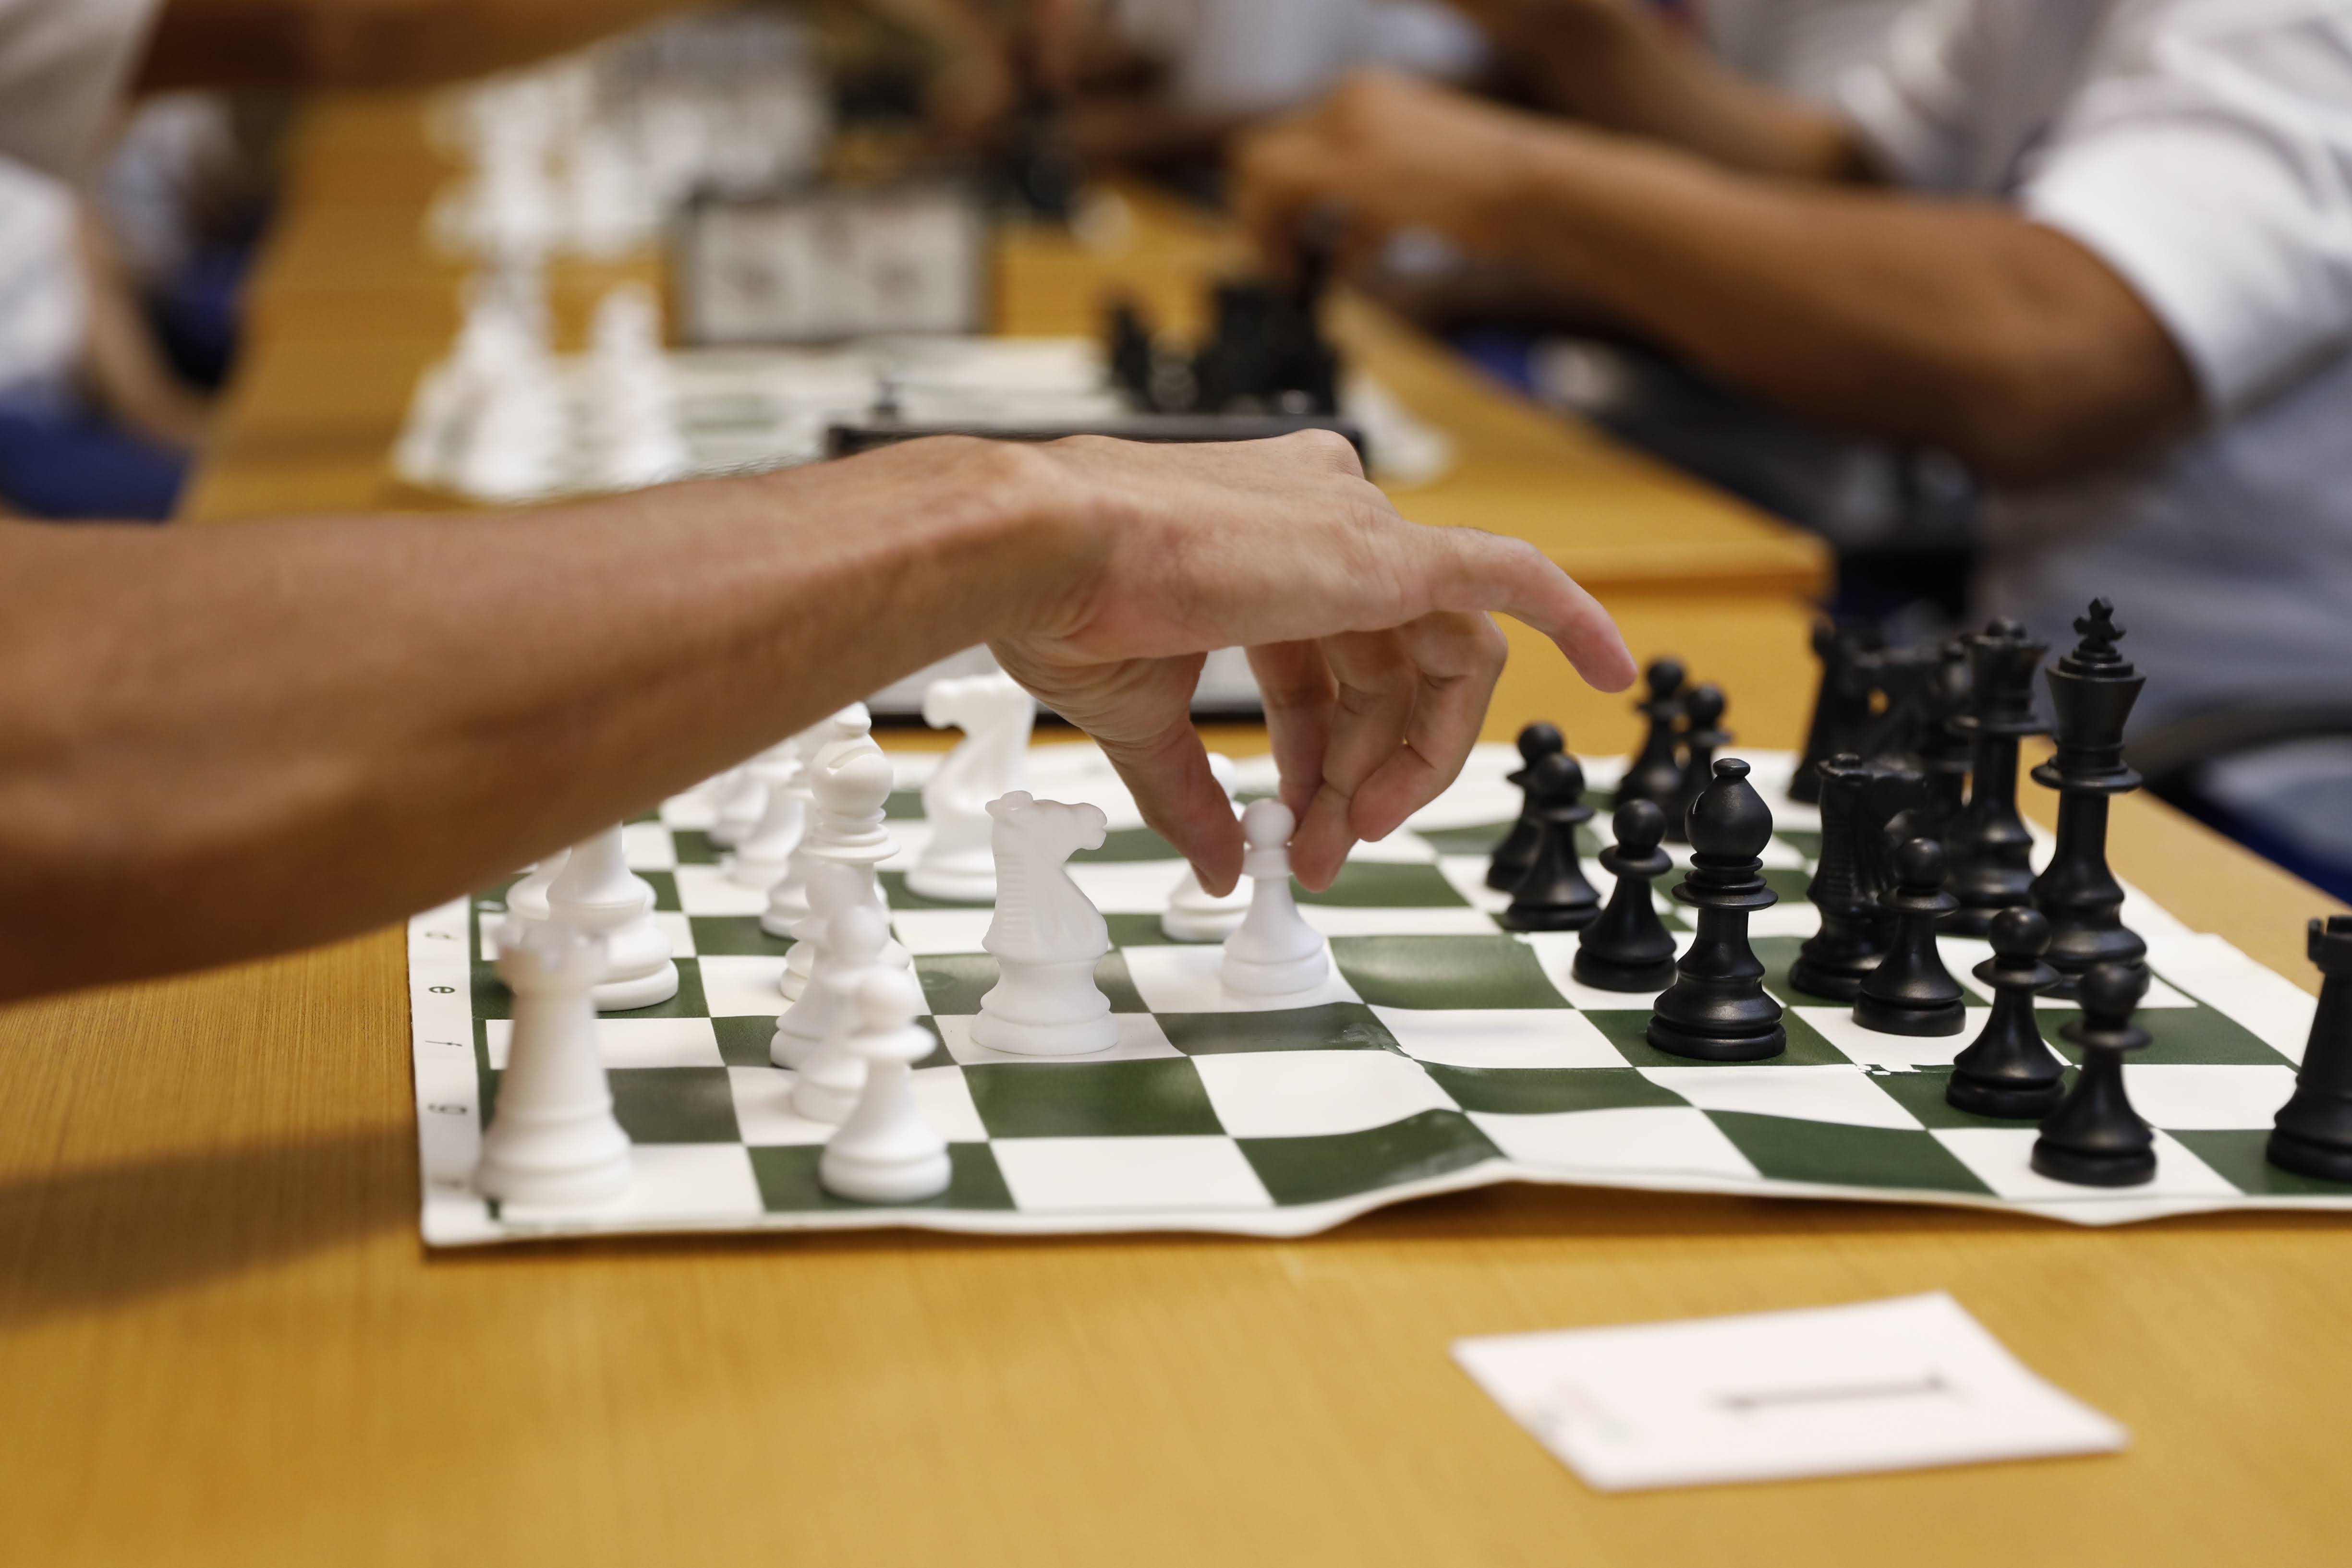 Assistente de aberturas de xadrez entre plataformas usado por